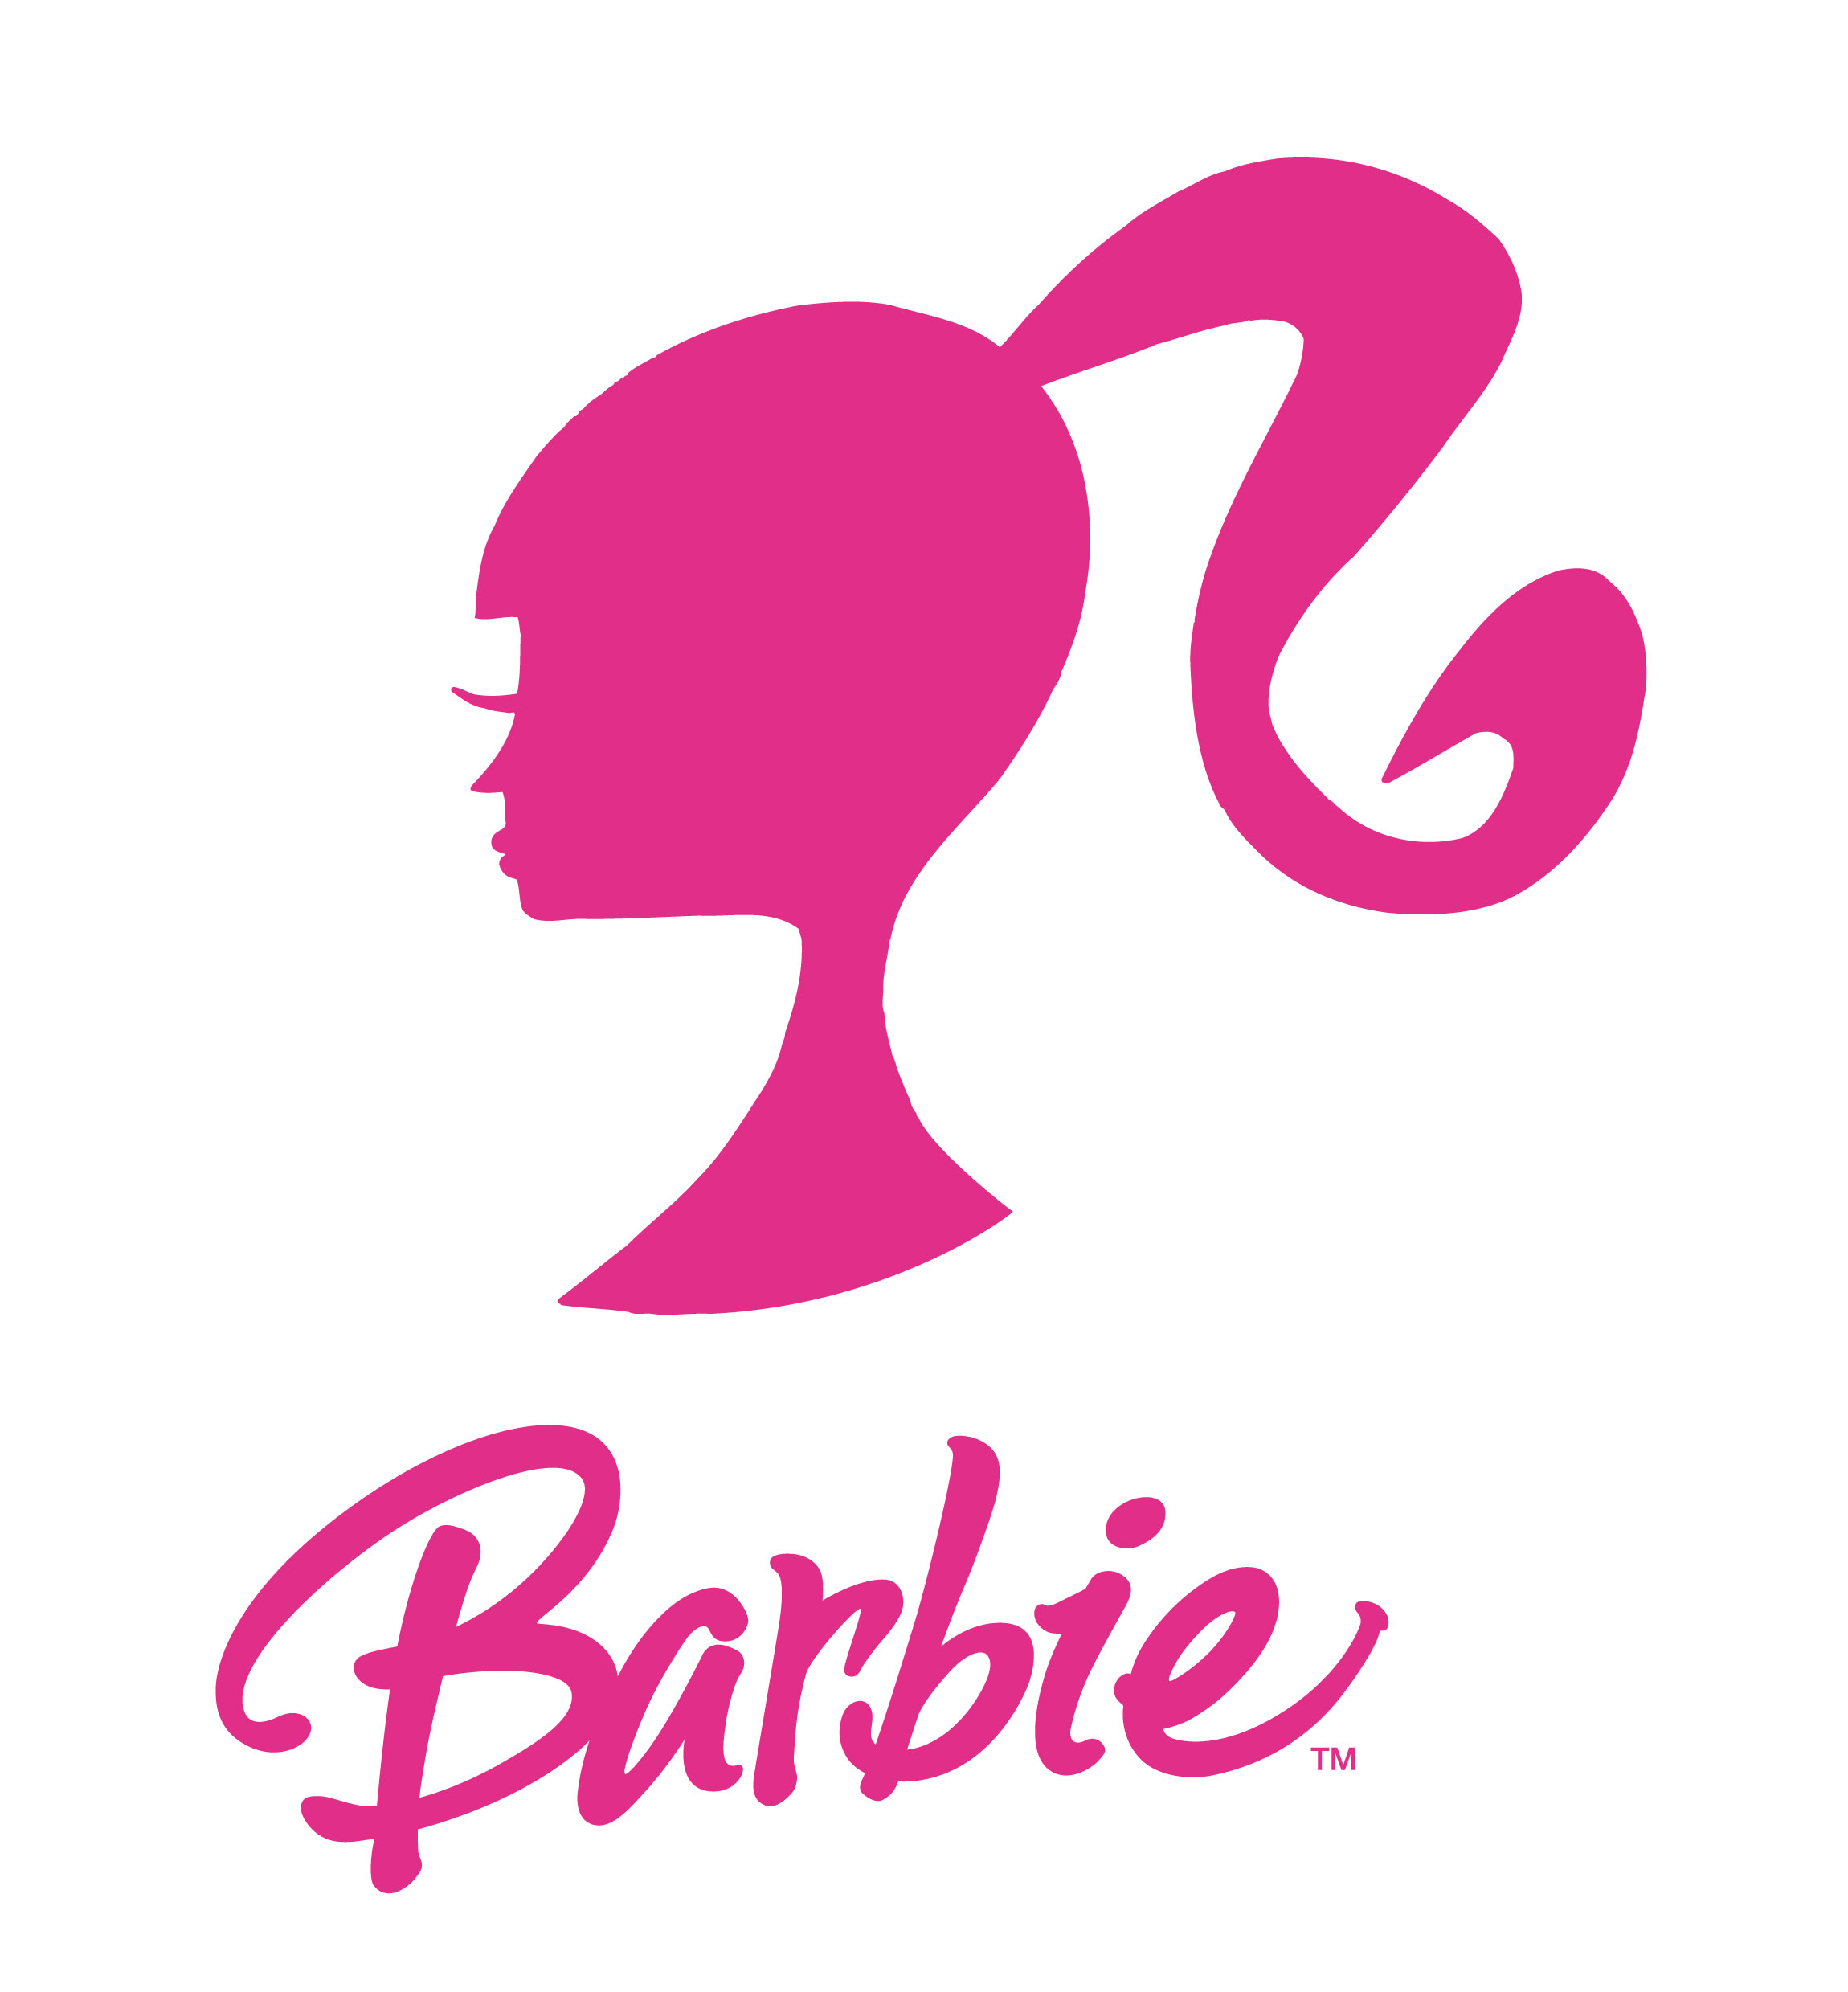 barbie logo | Logospike.com: Famous and Free Vector Logos